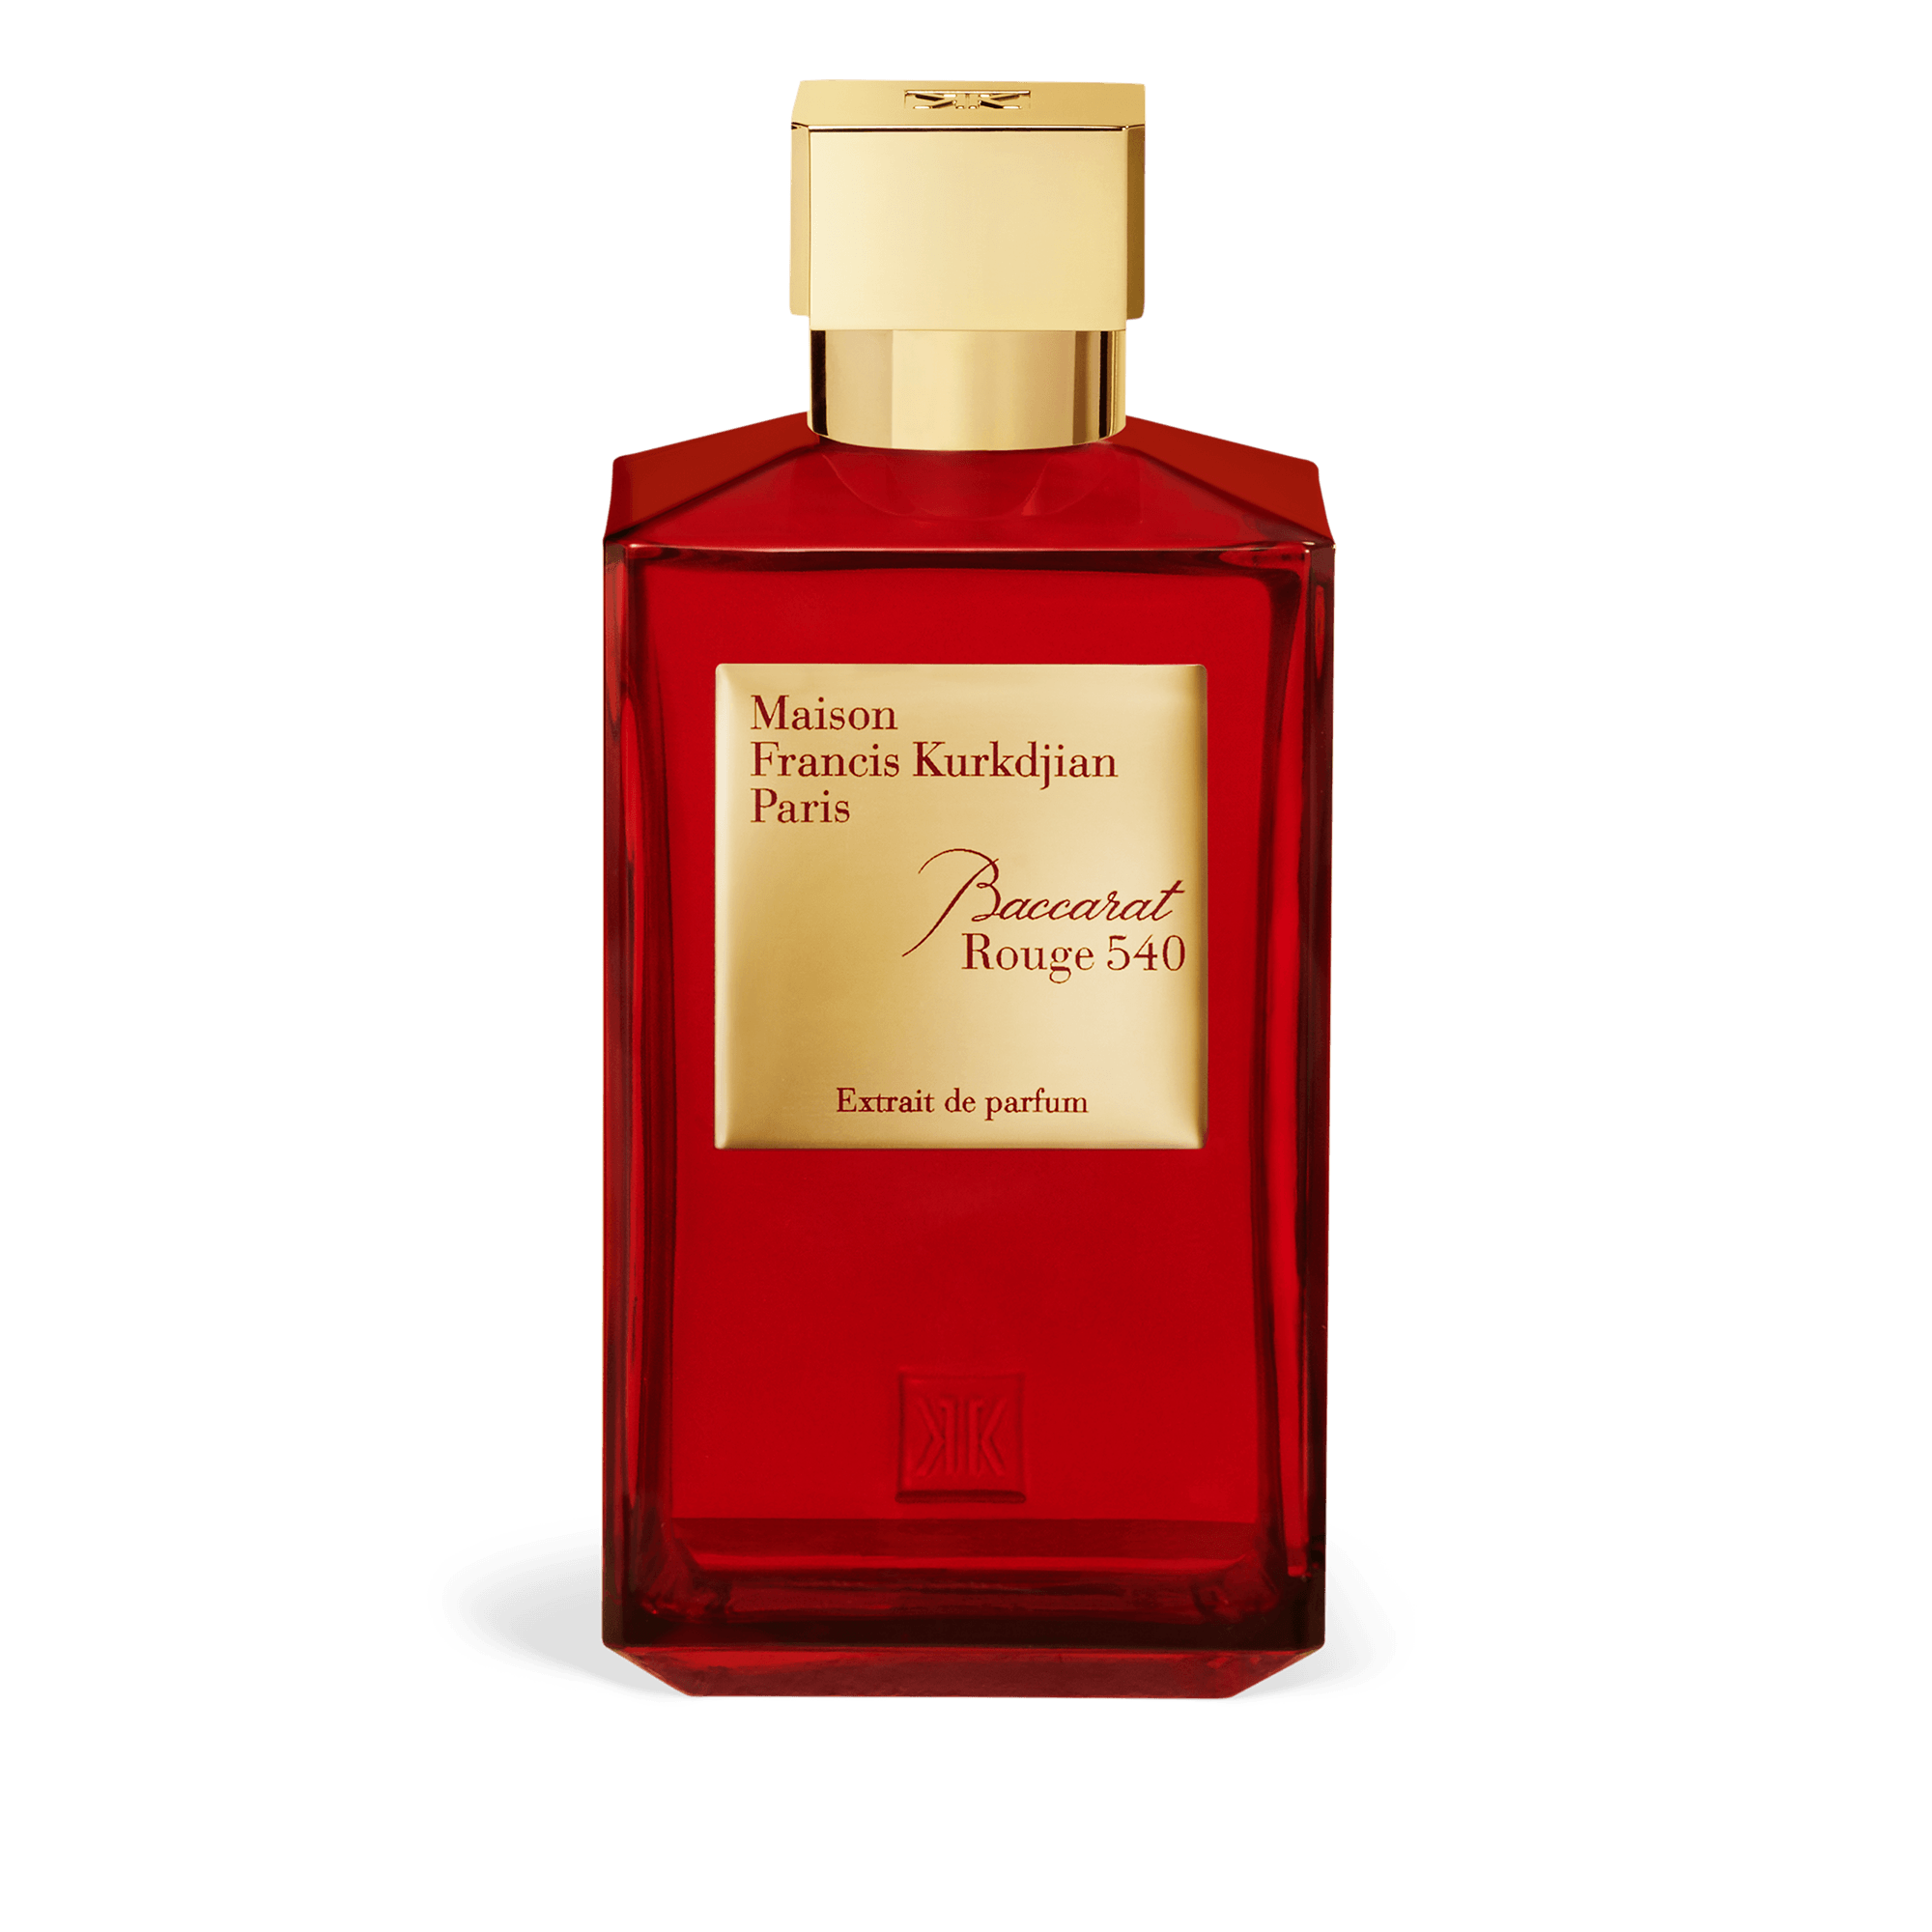 Maison Francis Kurkdjian - Baccarat Rouge 540 - extrait de parfum 200 ml | Perfume Lounge